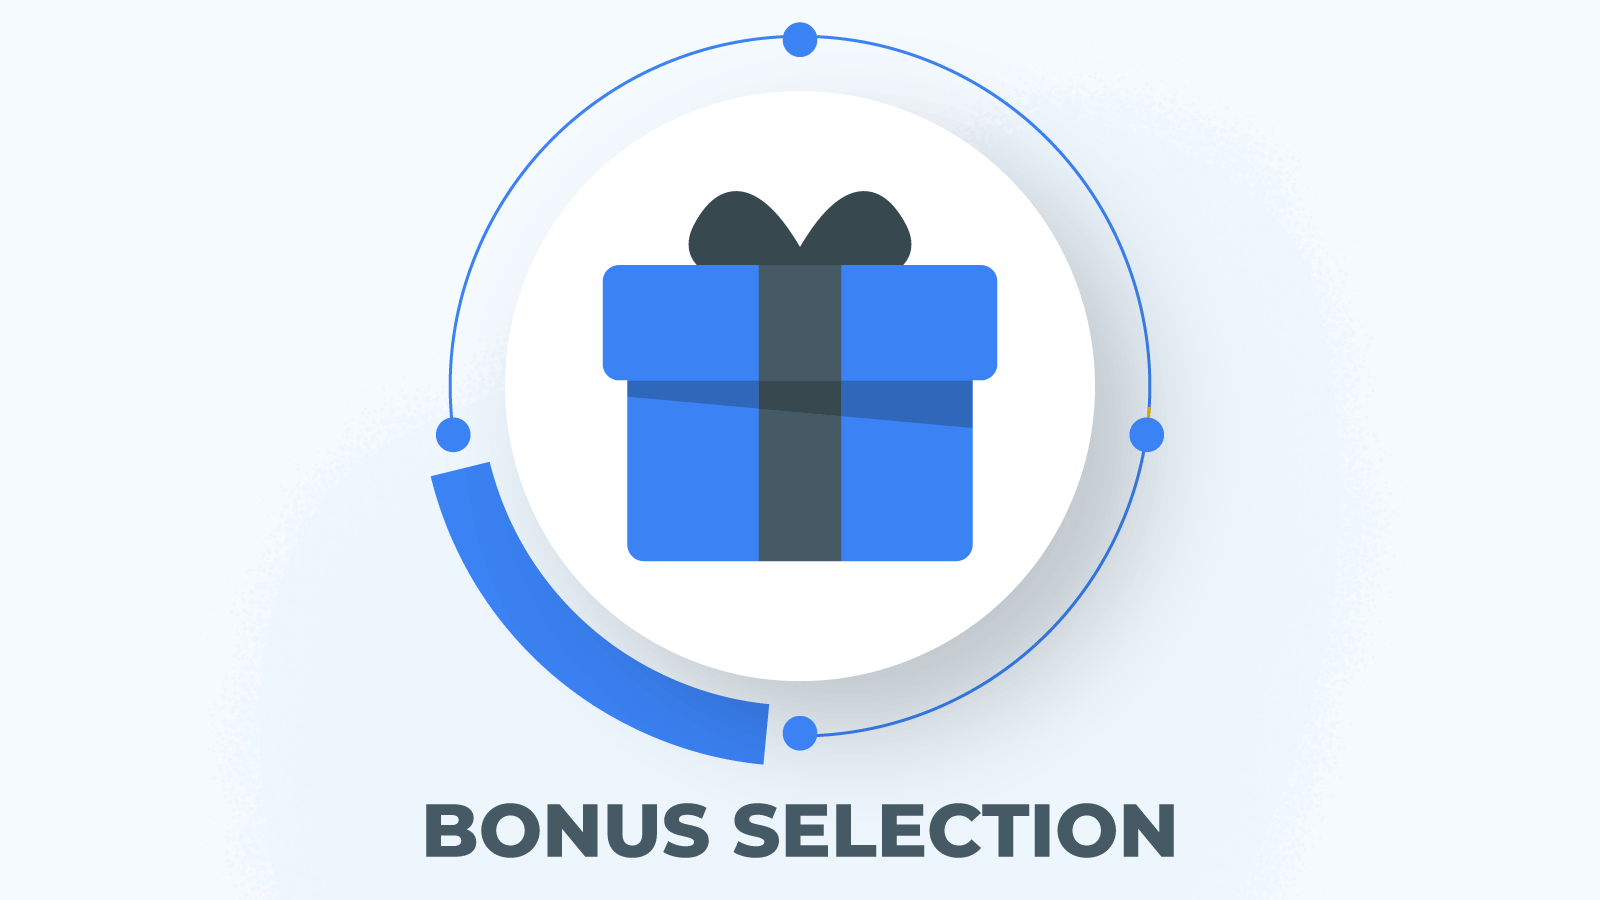 Explore the casino bonus selection